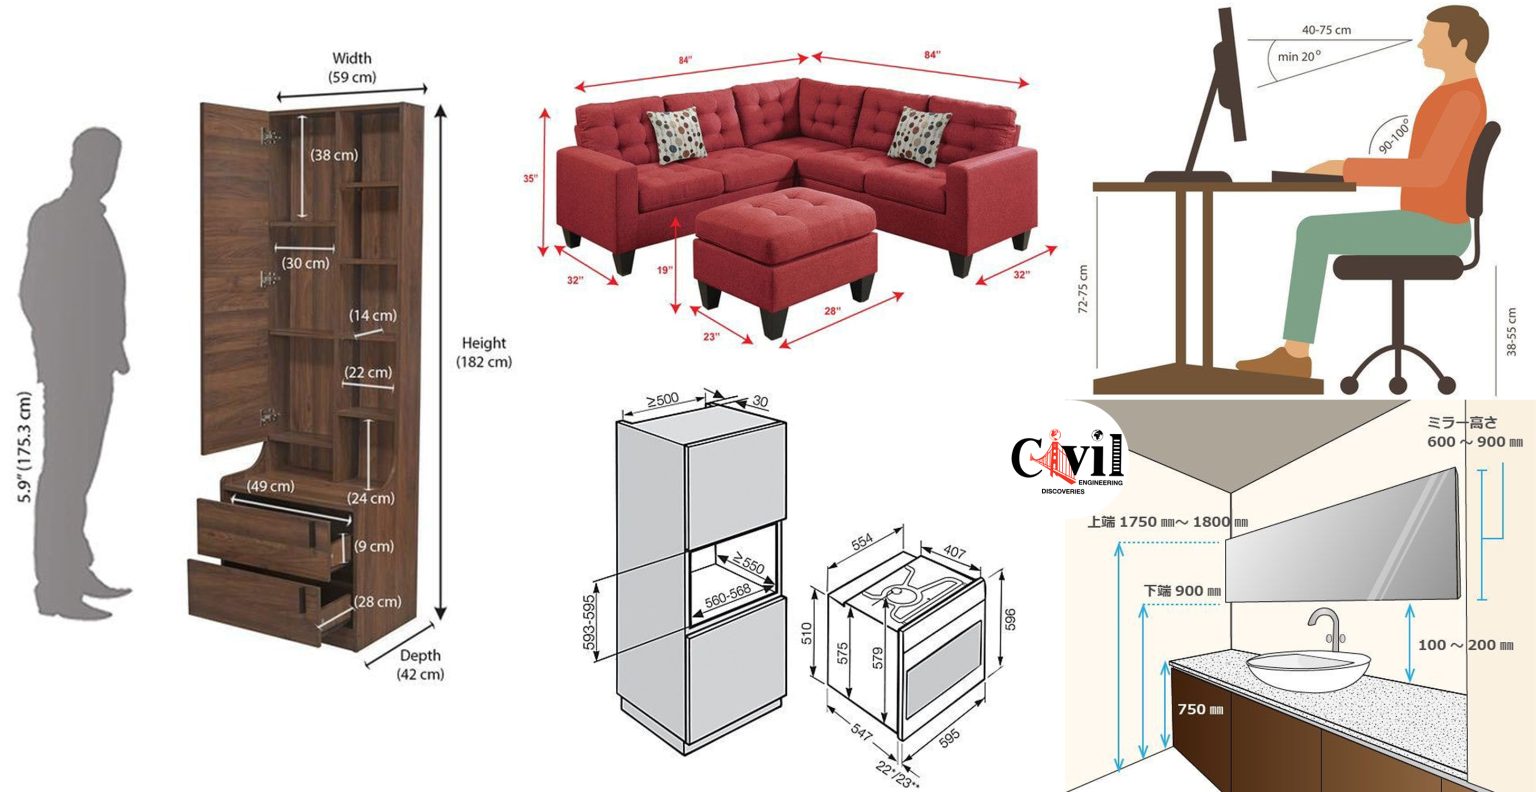 bedroom furniture dimensions pdf